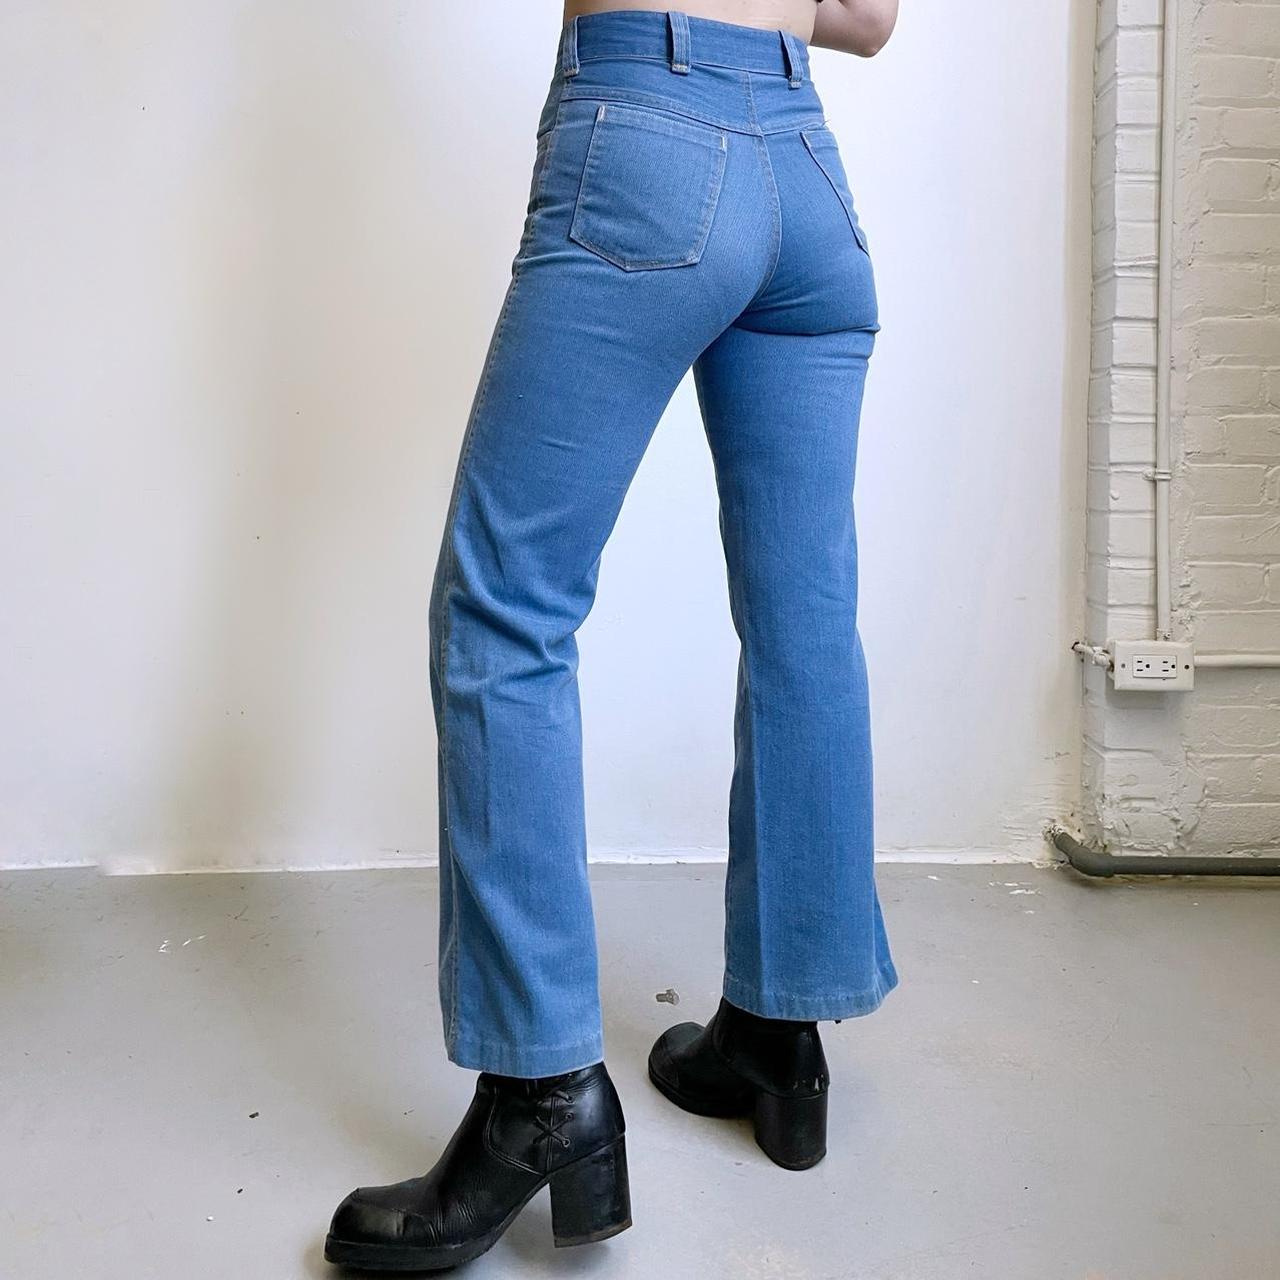 70s vintage bootcut flare western jeans by St... - Depop